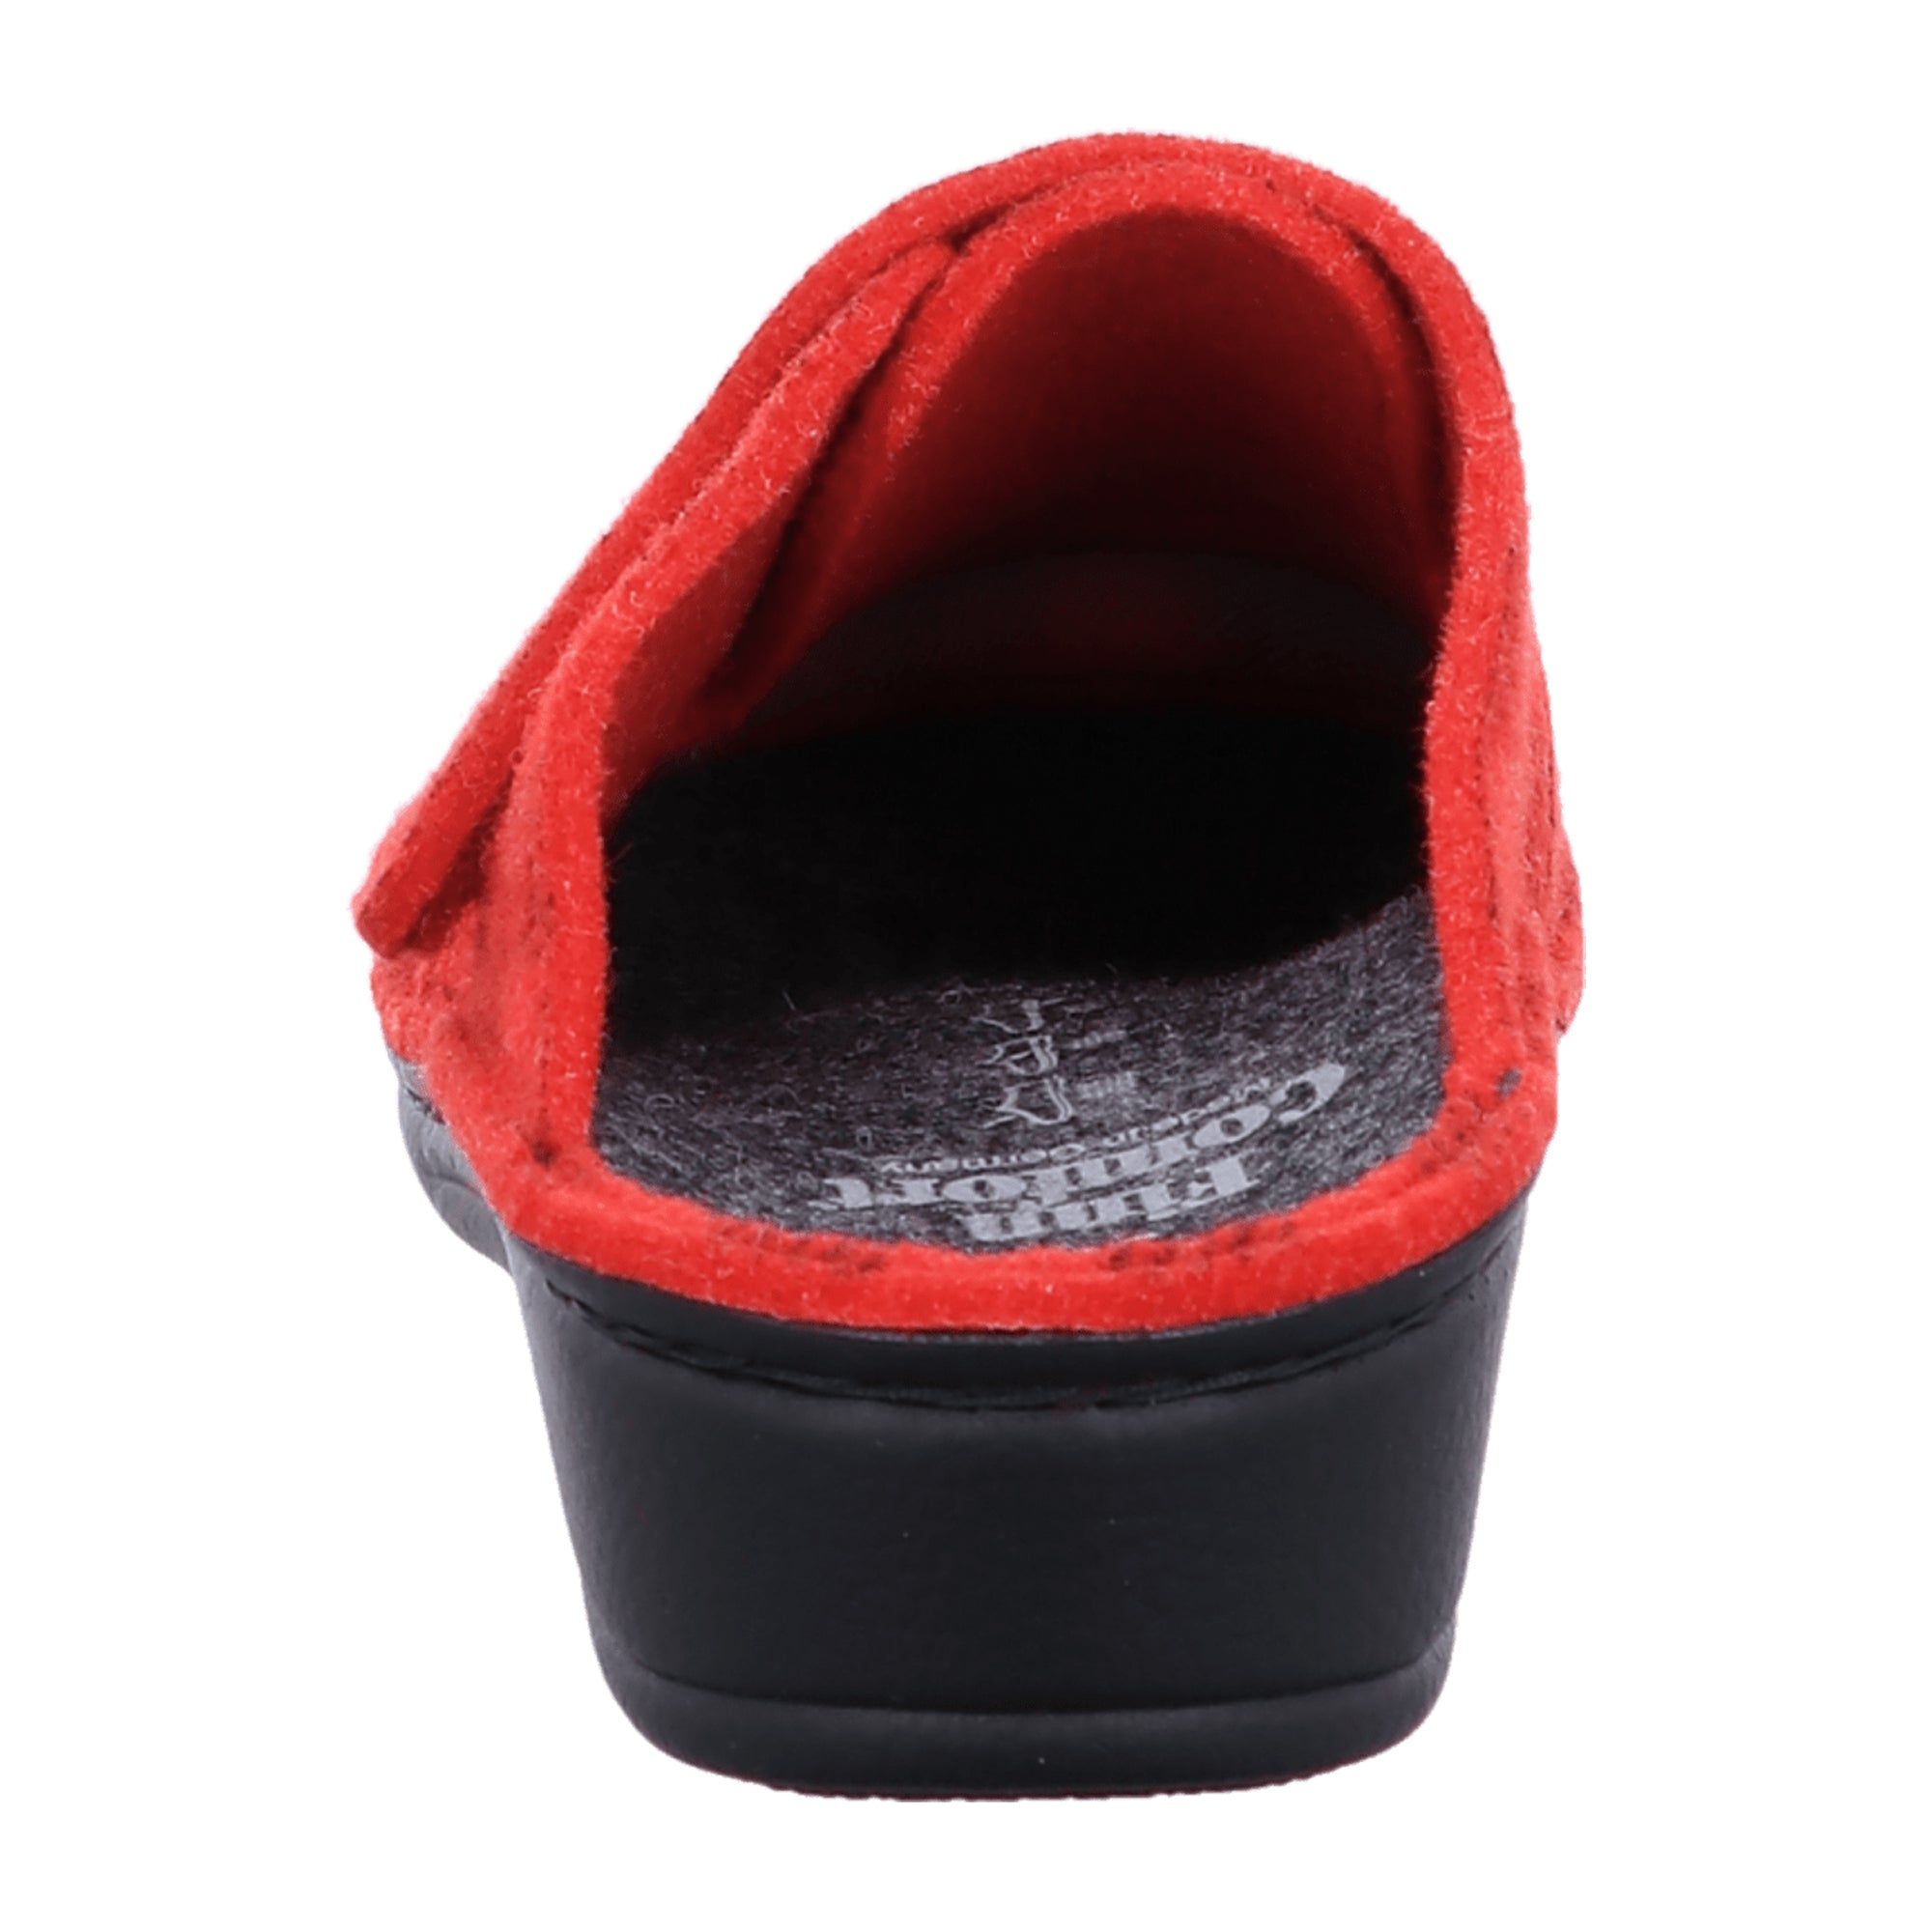 Finn Comfort Andermatt Women’s Red Comfort Slippers - Stylish & Durable